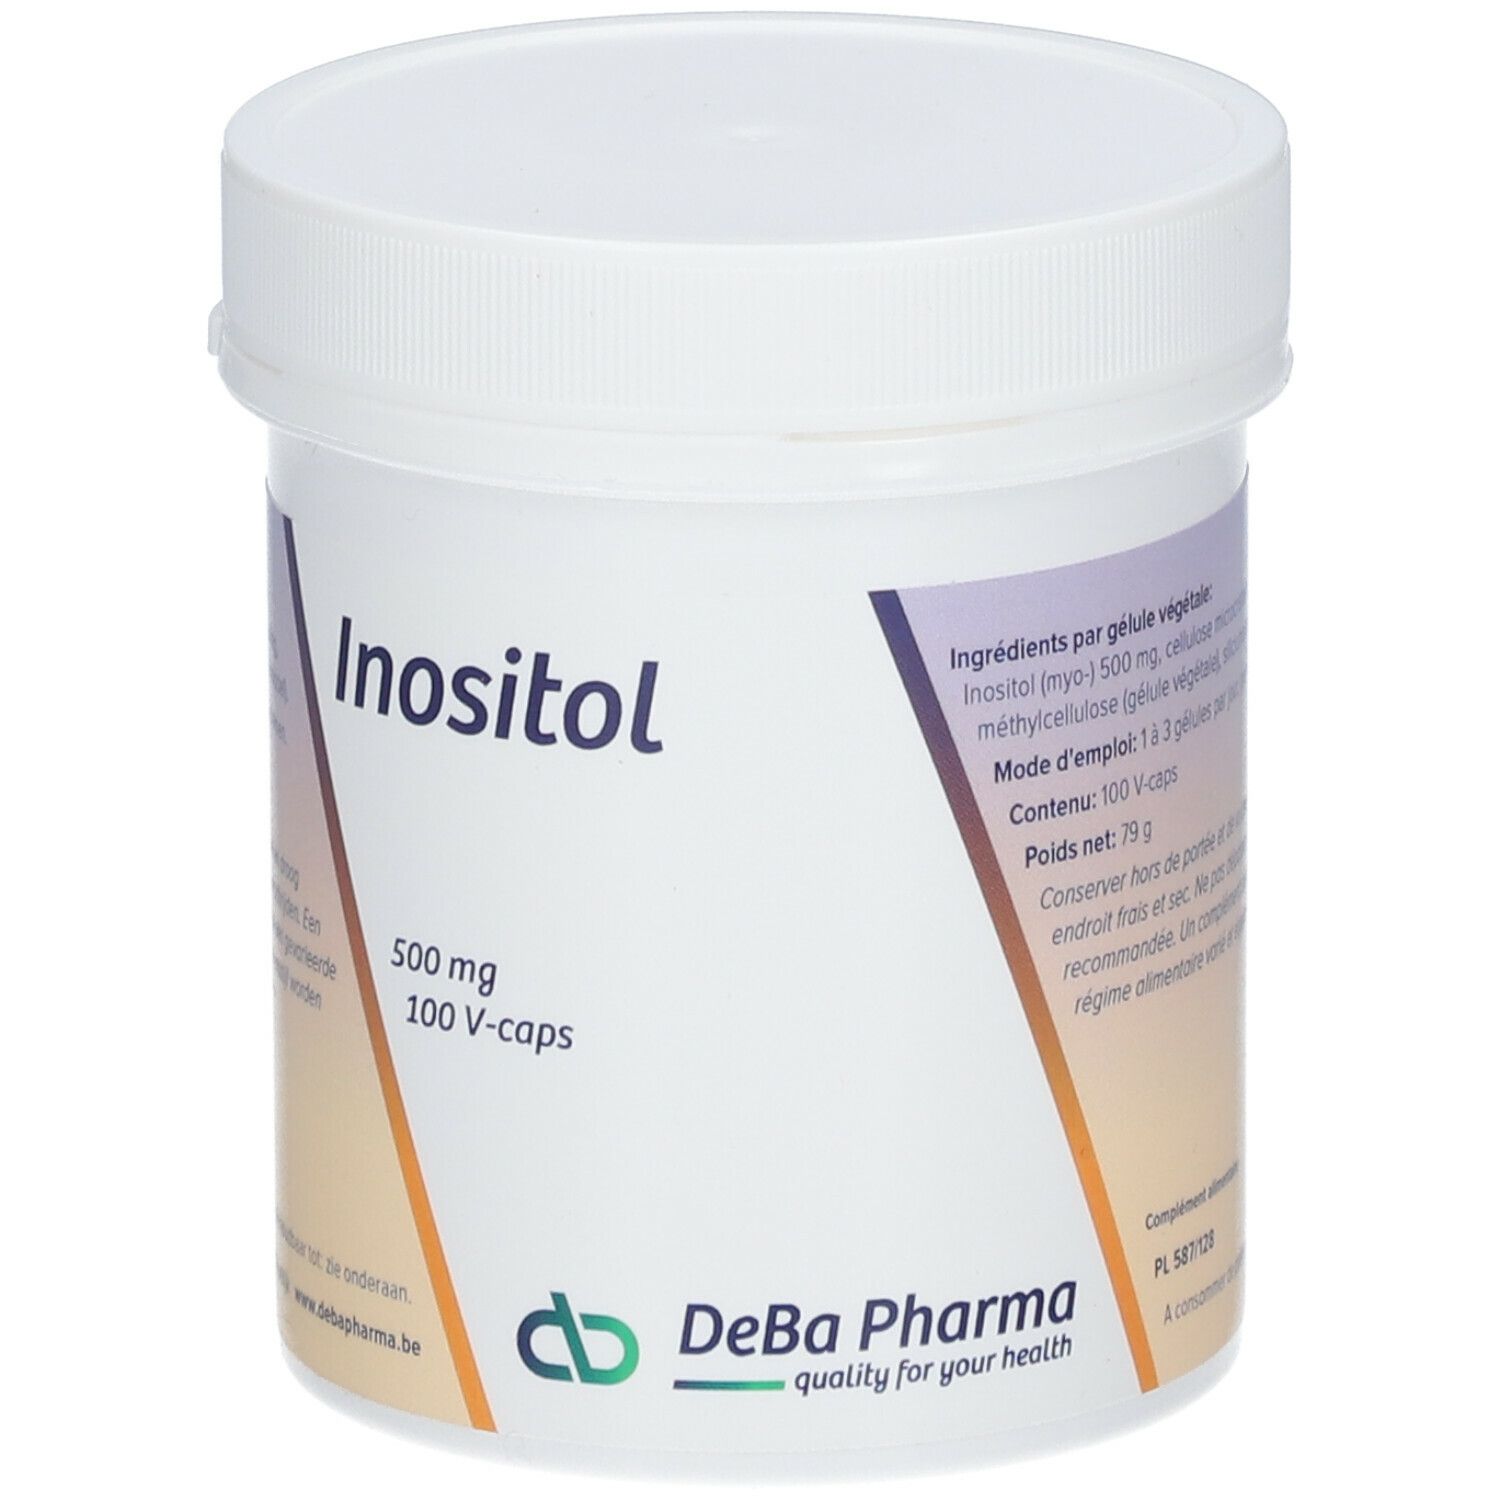 DeBa Pharma Inositol